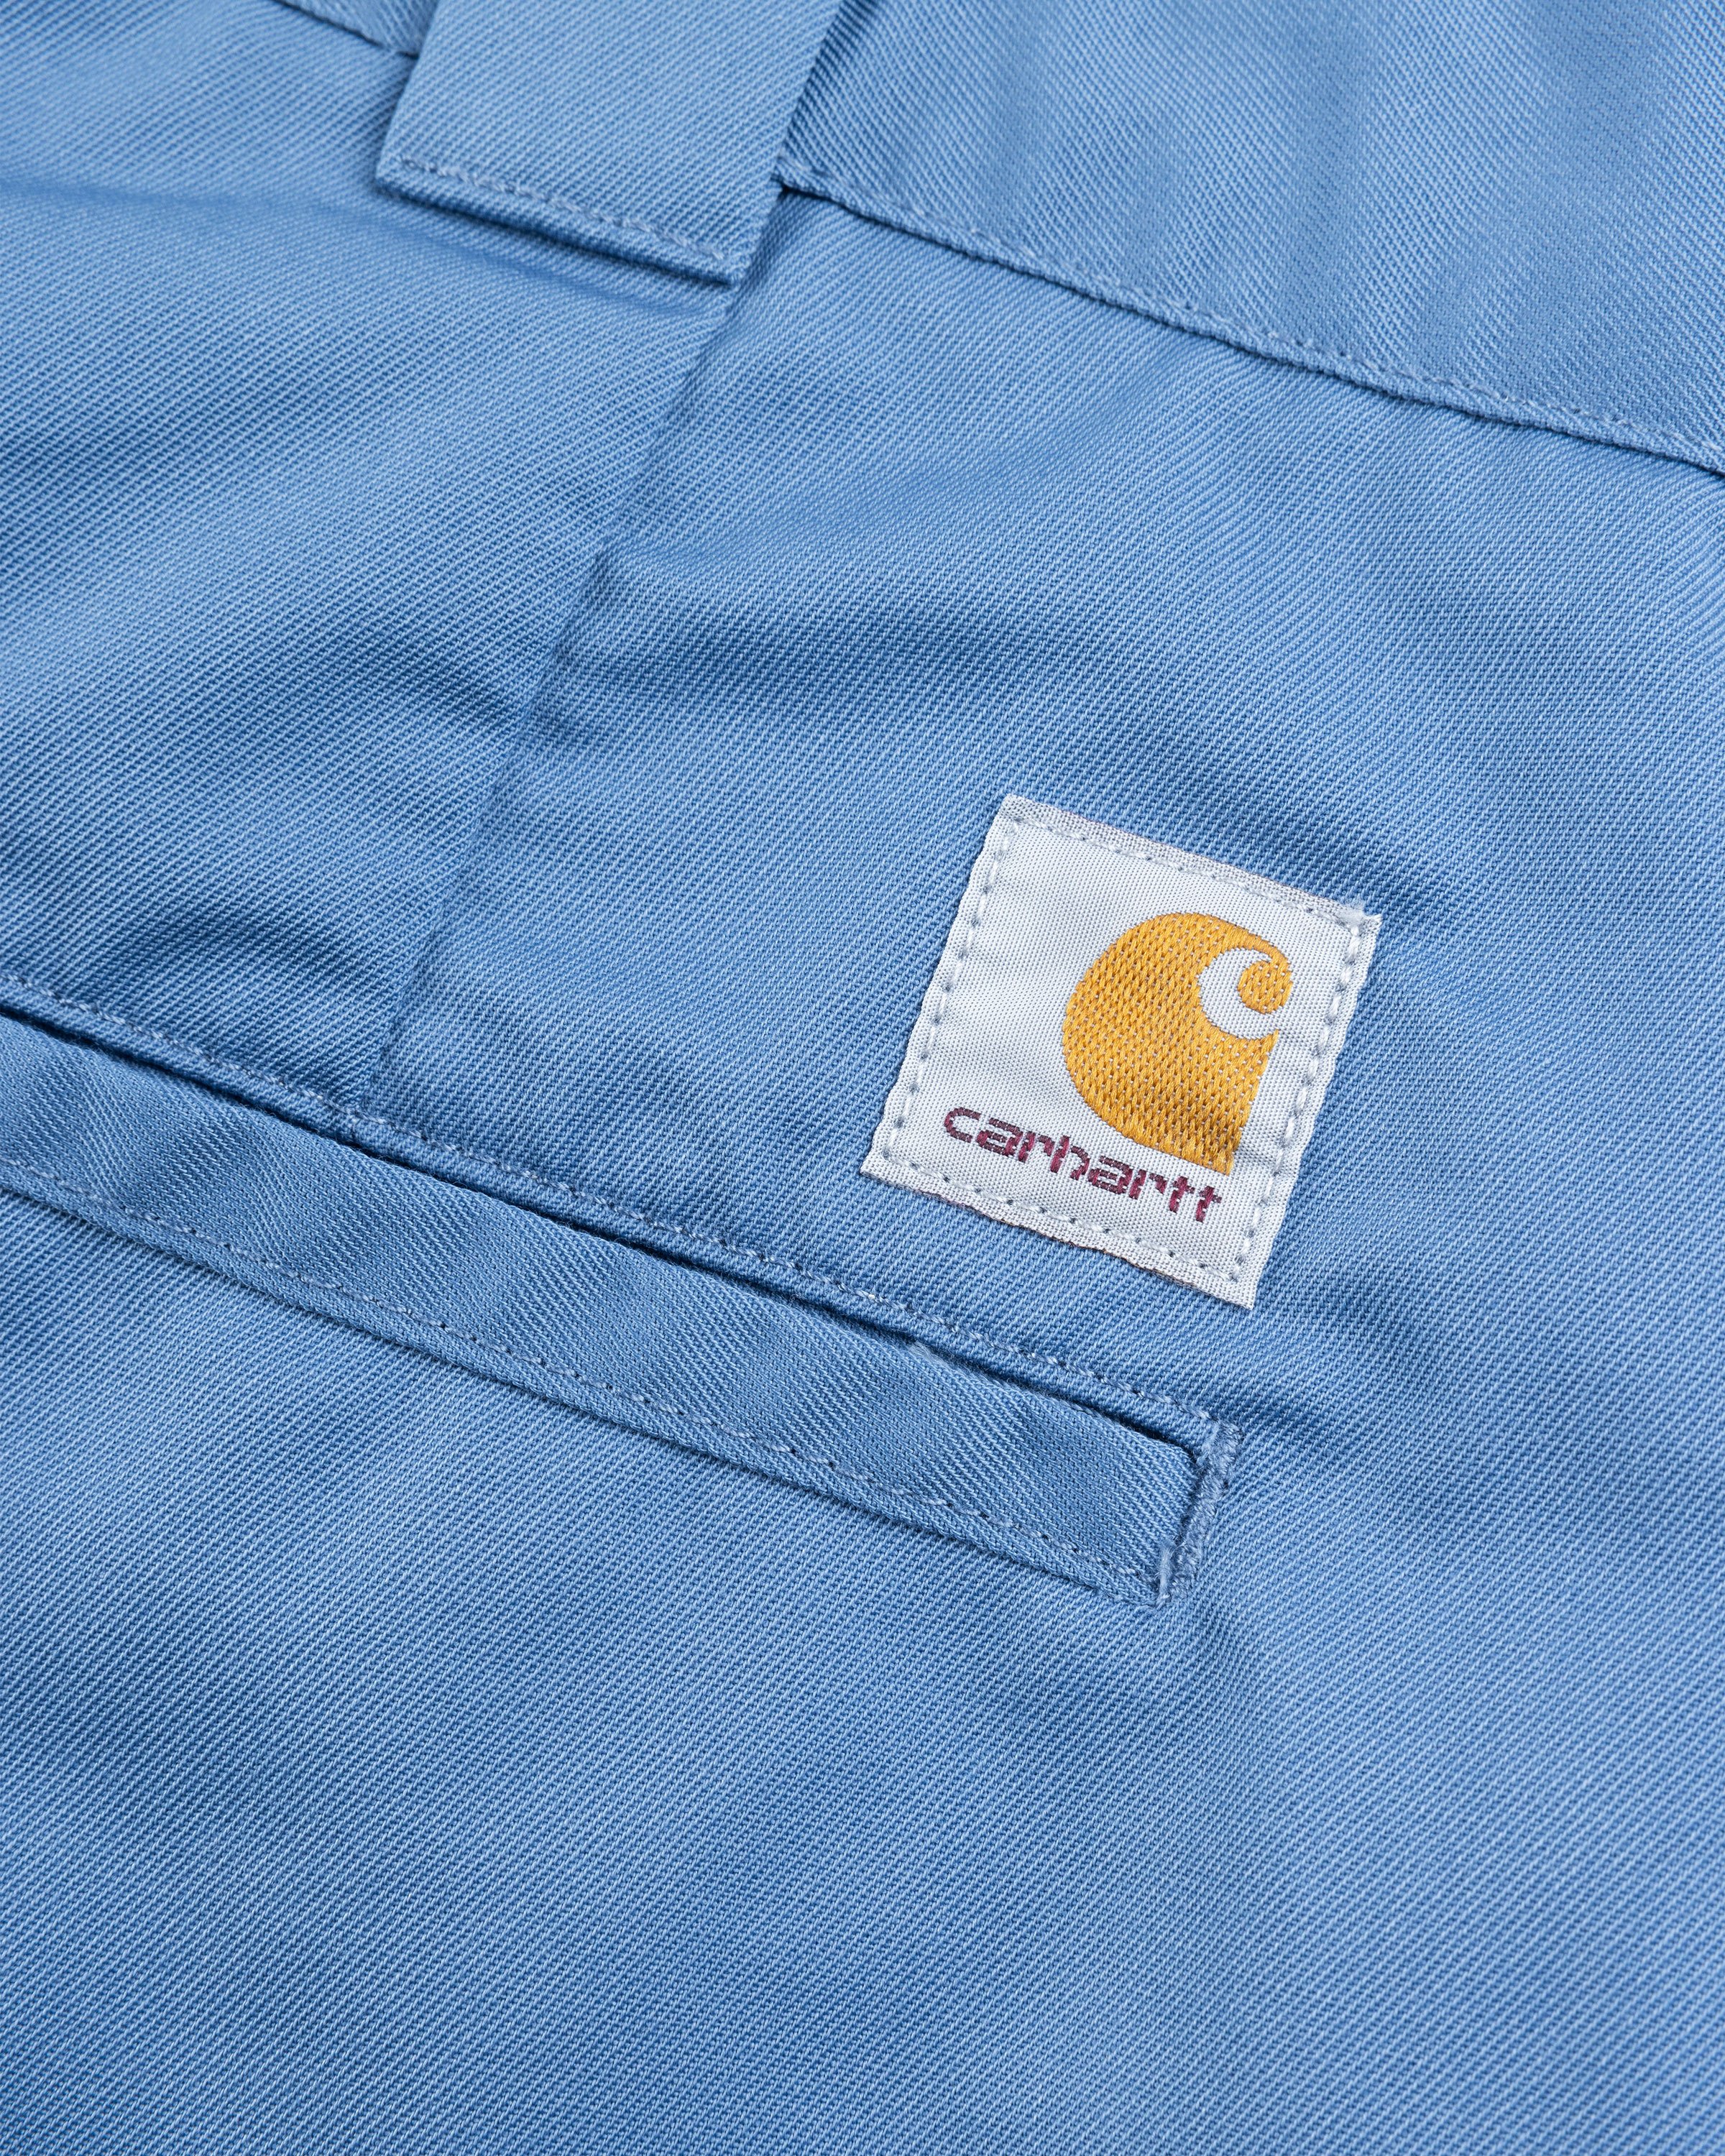 Carhartt WIP - Craft Short Sorrent /rinsed - Clothing - Blue - Image 6